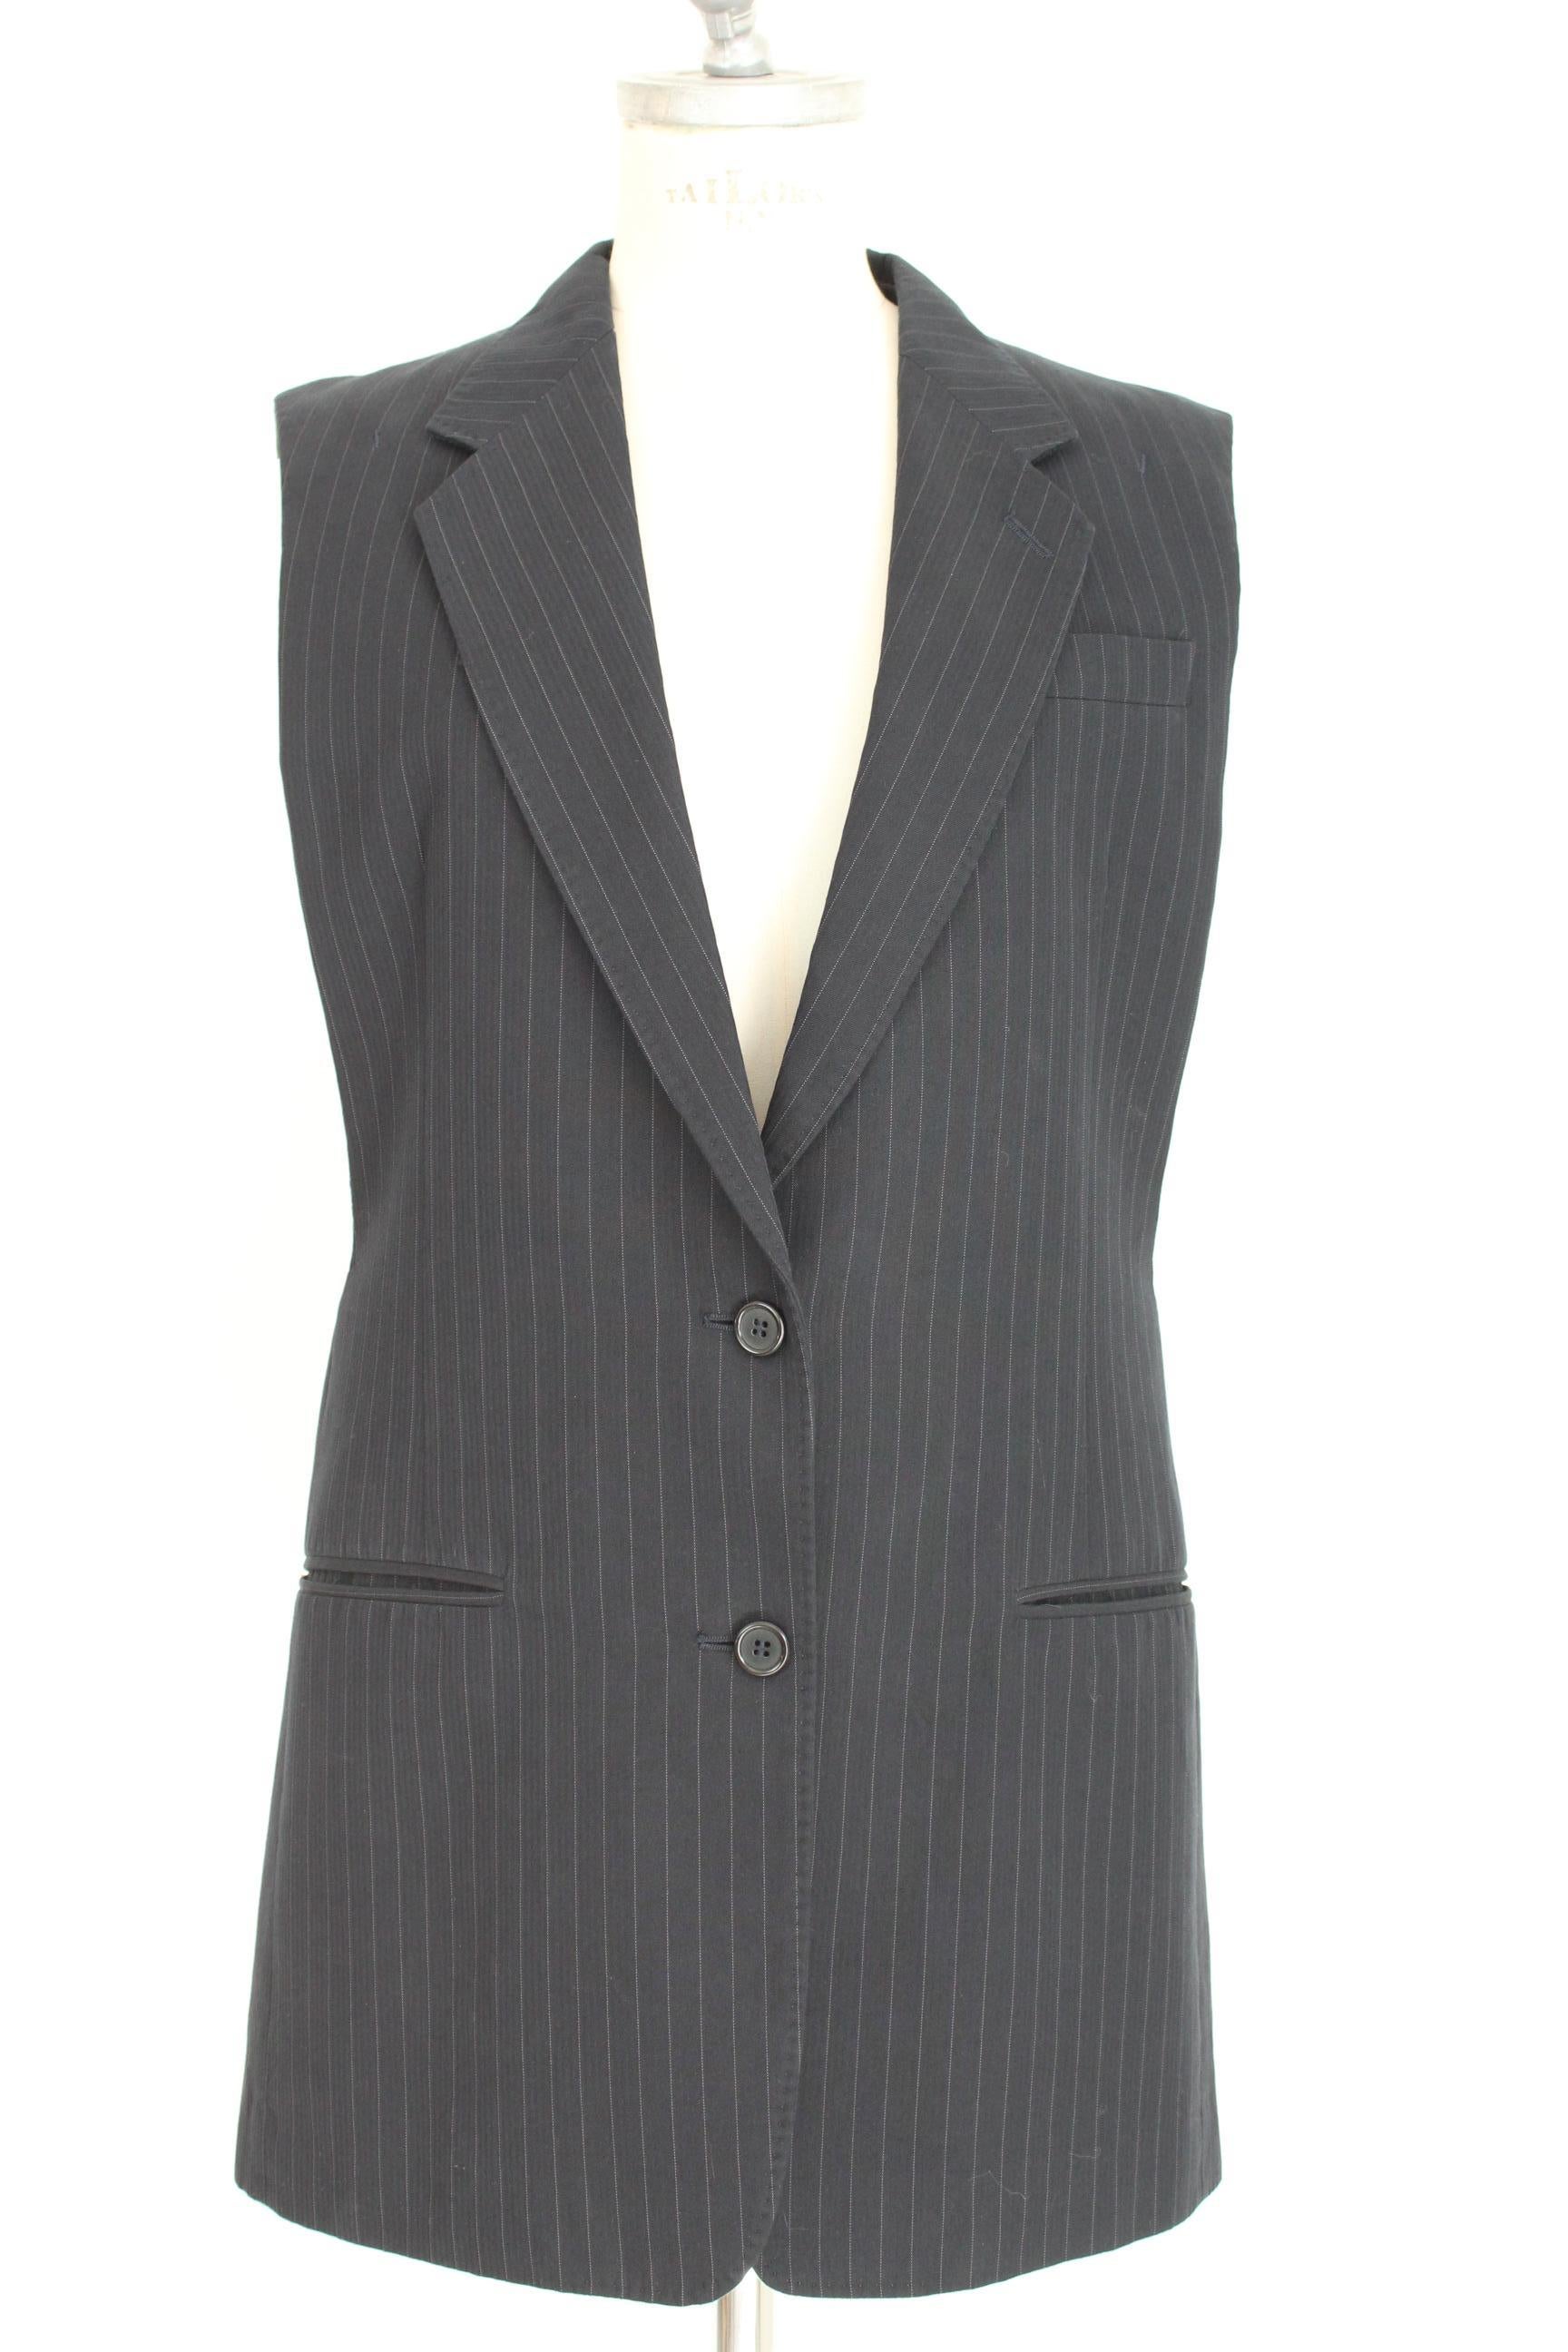 Women's Martin Margiela Blue Gray Cotton Sleeveless Vest Pinstripe Jacket 1990s